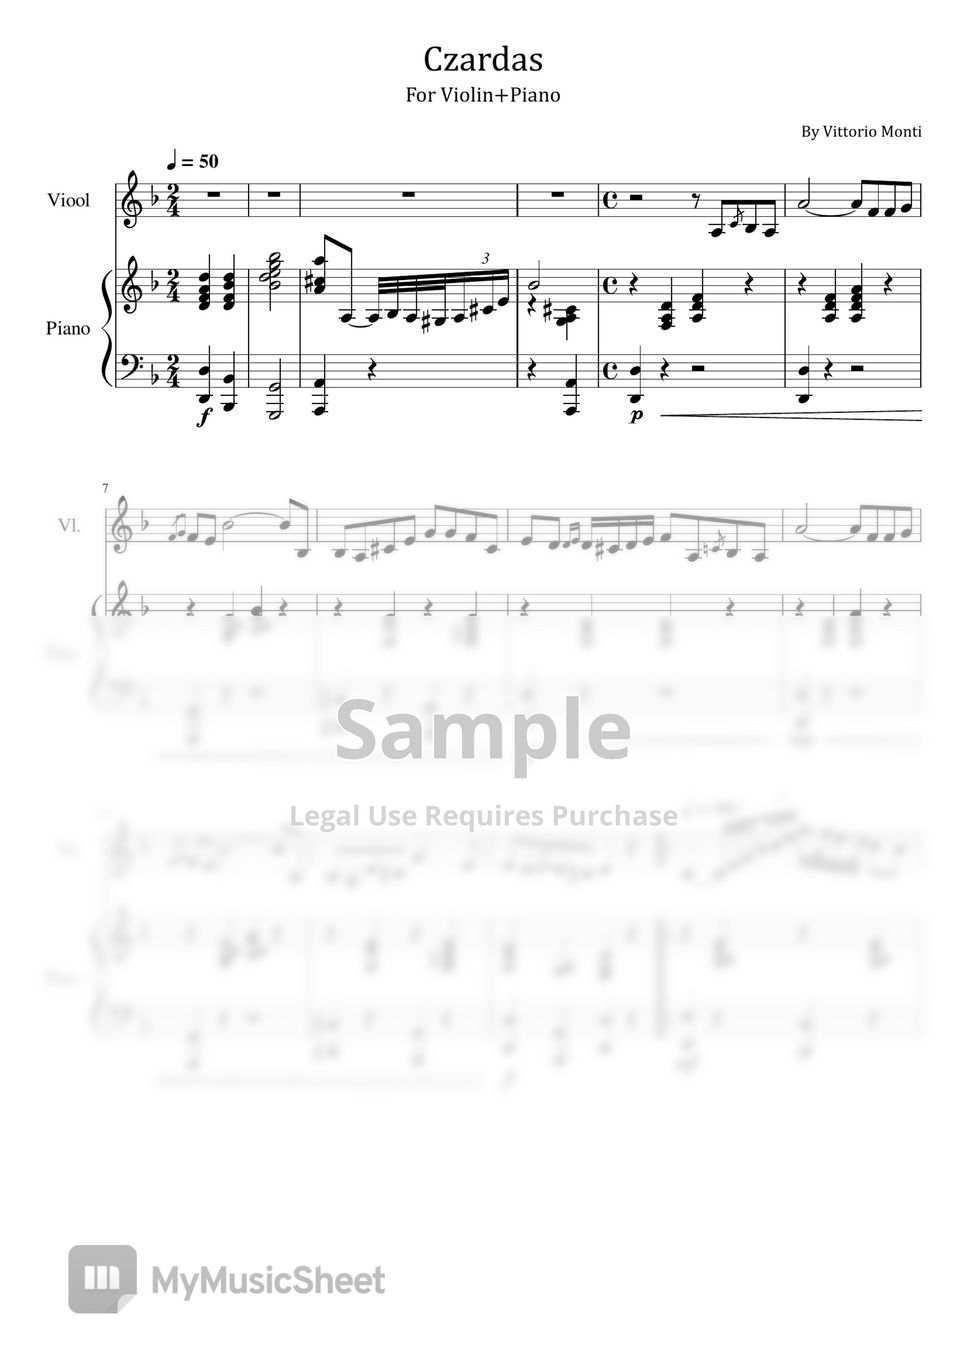 Vittorio Monti - Czardas (For Violin+Piano) by poon